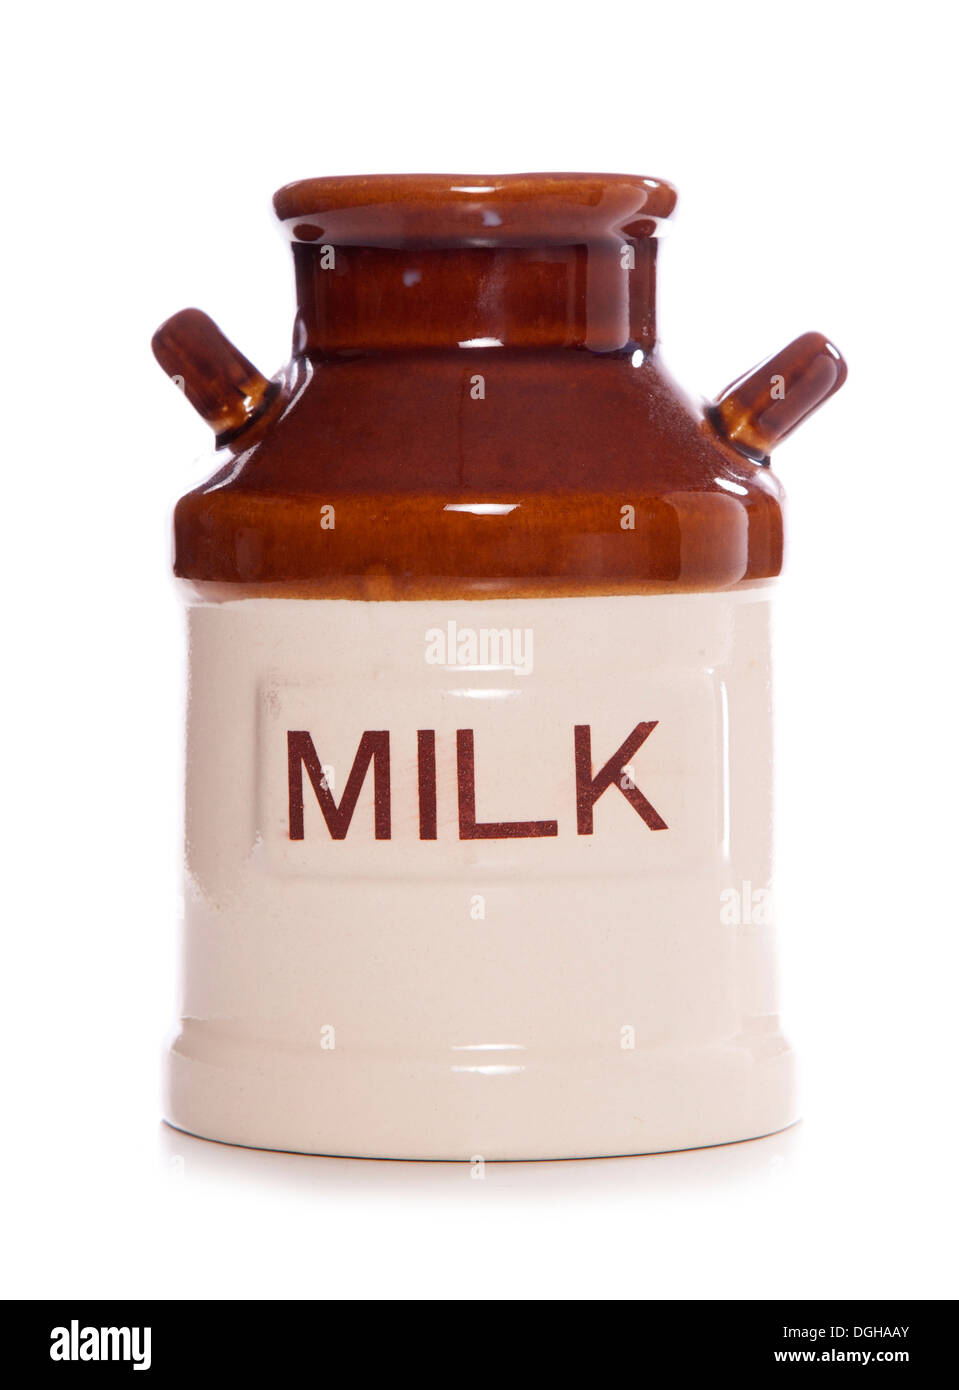 vintage milk jug studio cut out Stock Photo - Alamy